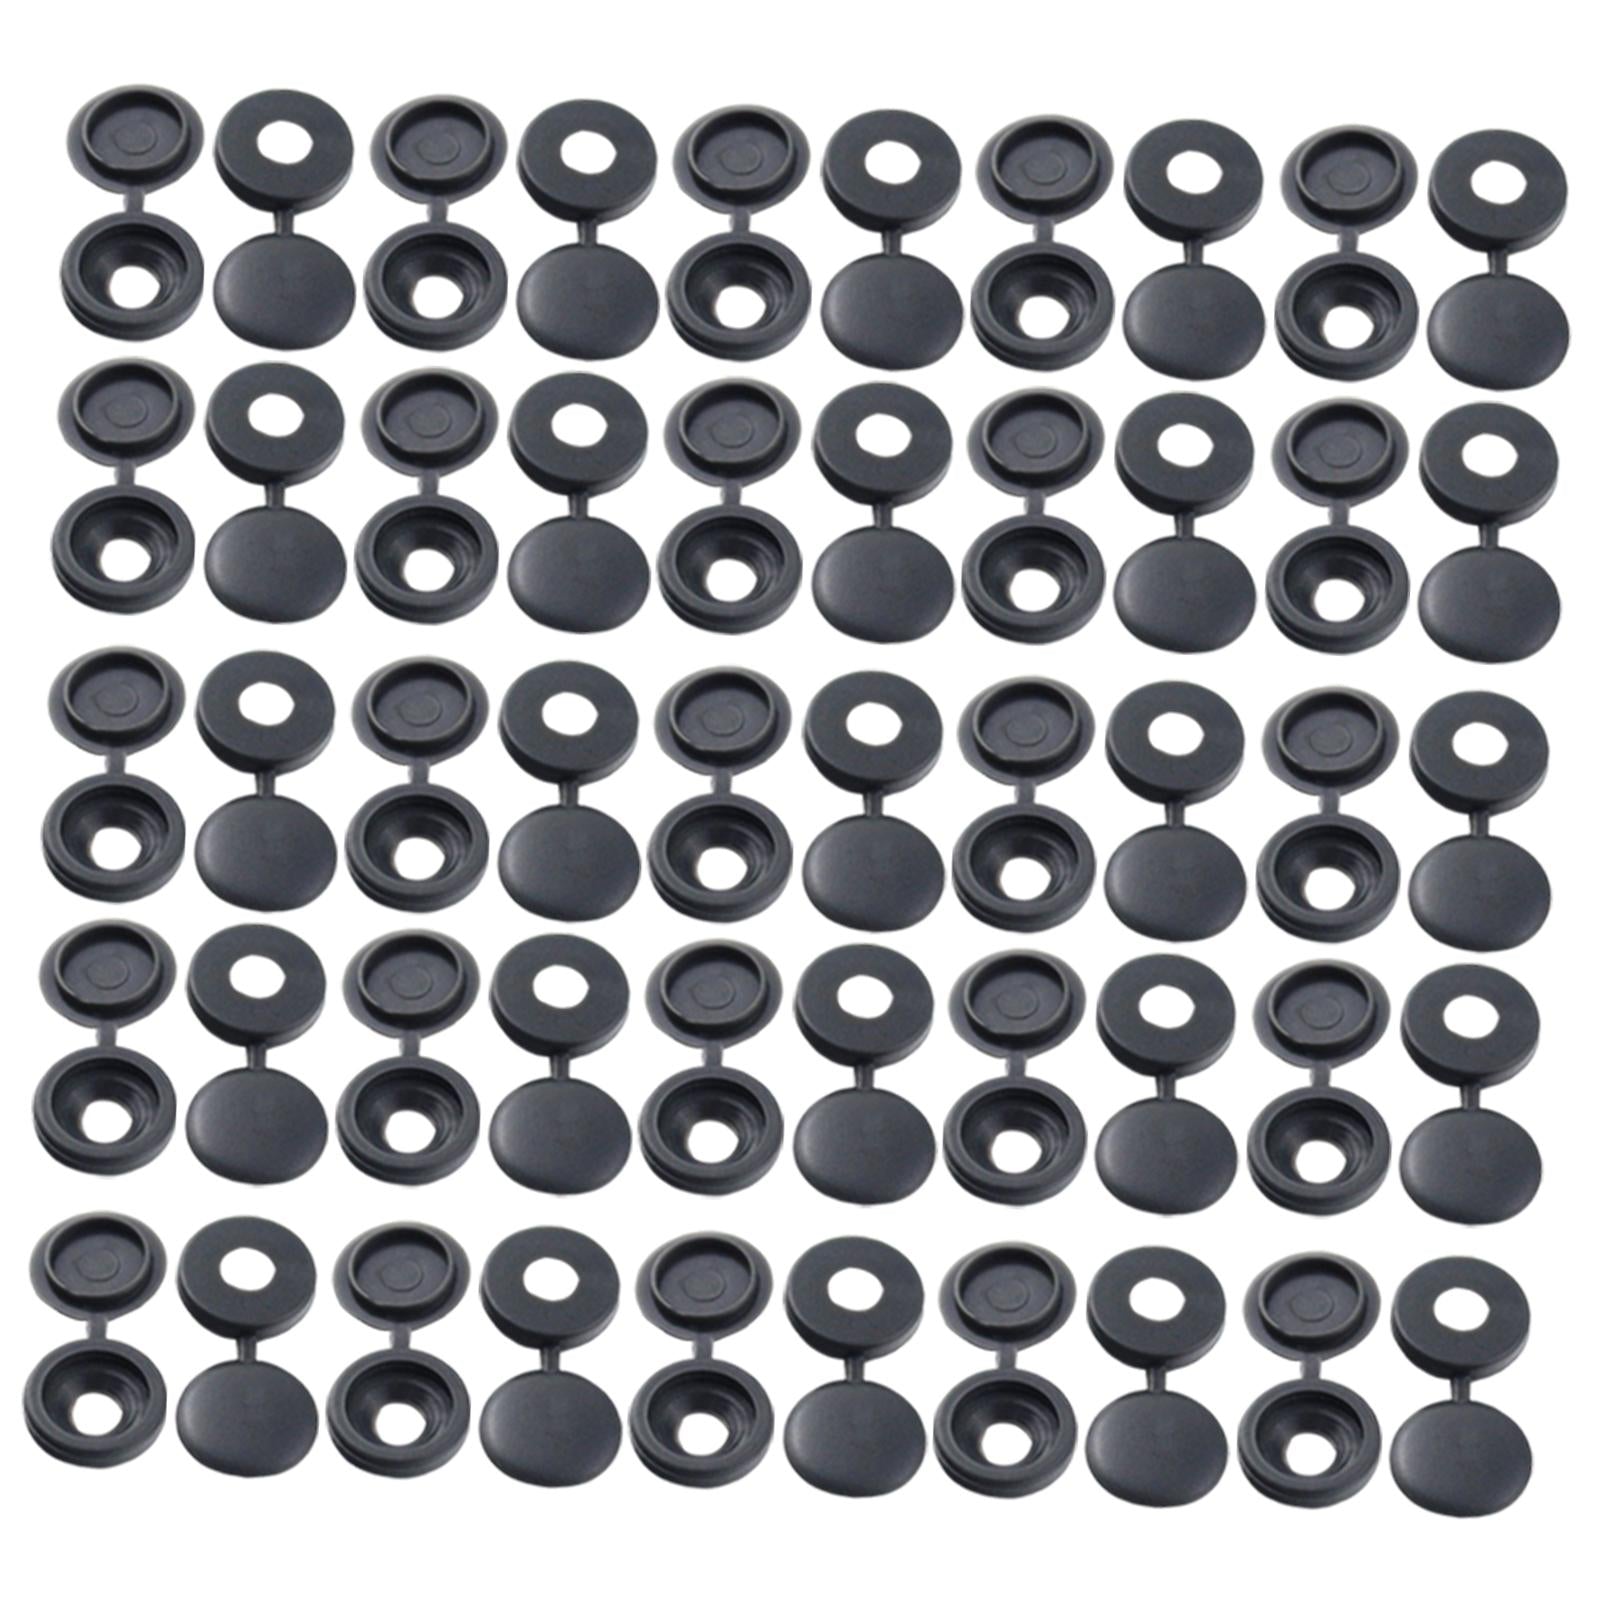 100 Pieces Screw Covers, Practical Screws Caps for Replacement Tools Yard Dark Grey